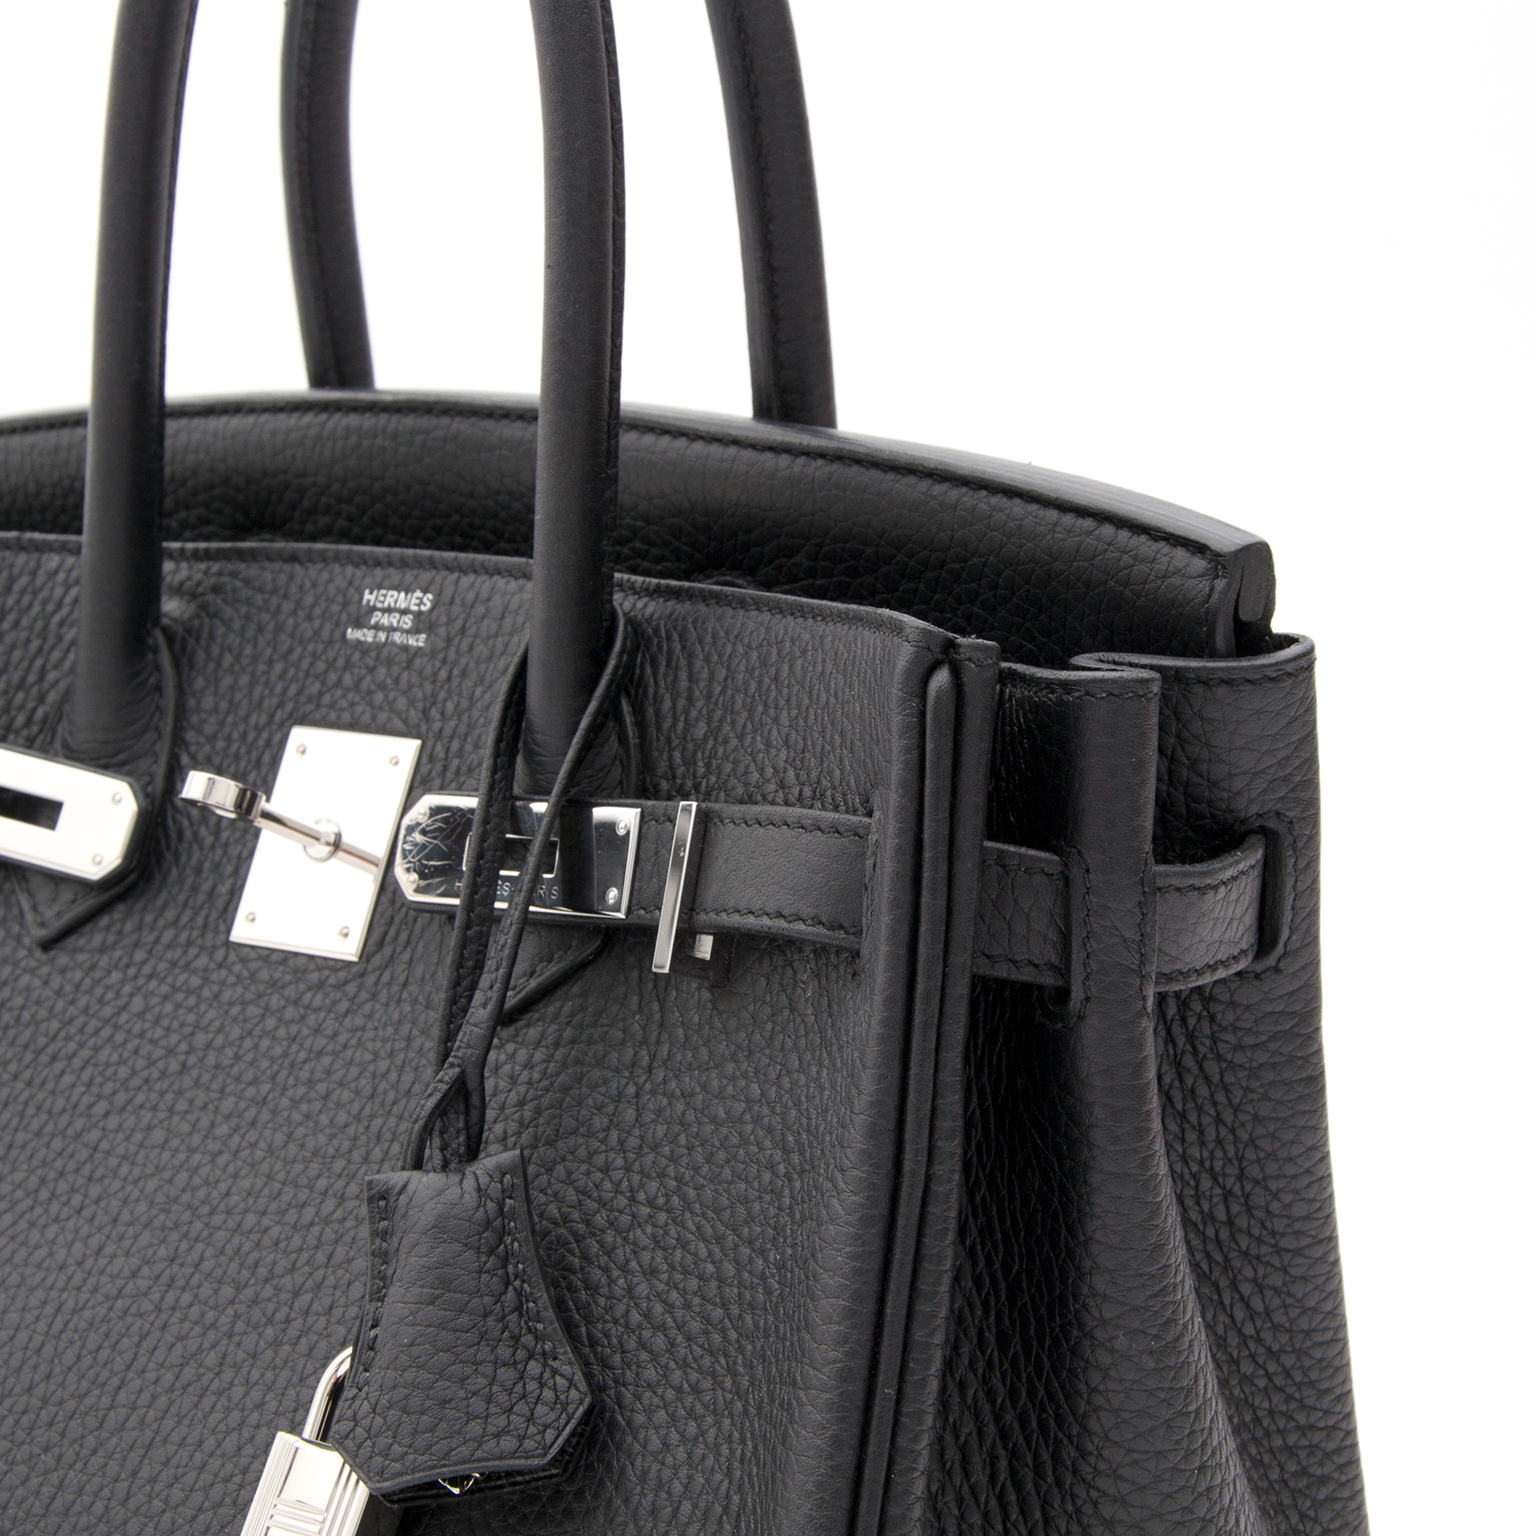 Hermès Birkin 30 Togo Black ○ Labellov ○ Buy and Sell Authentic